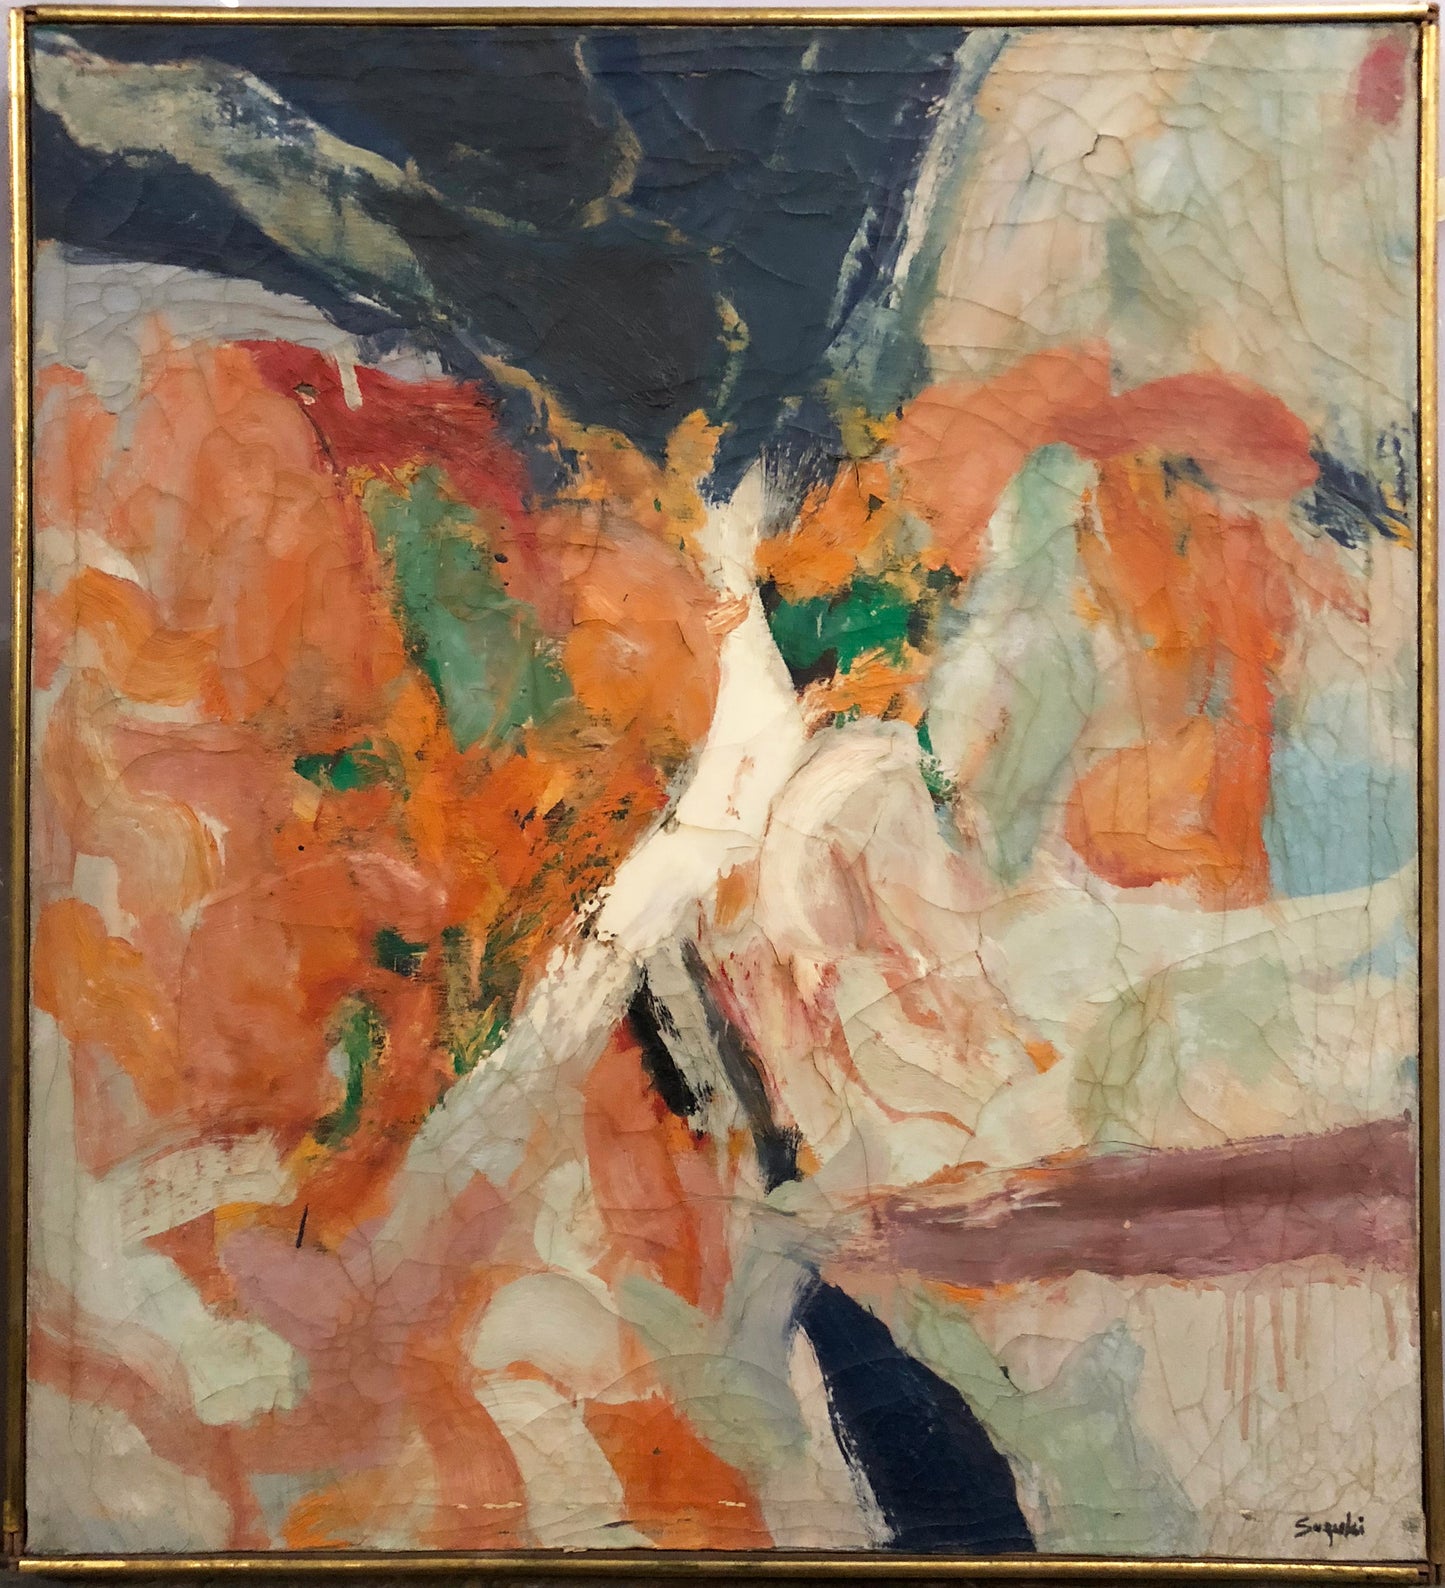 James Suzuki Oil Painting: "Infiniteness" 1960